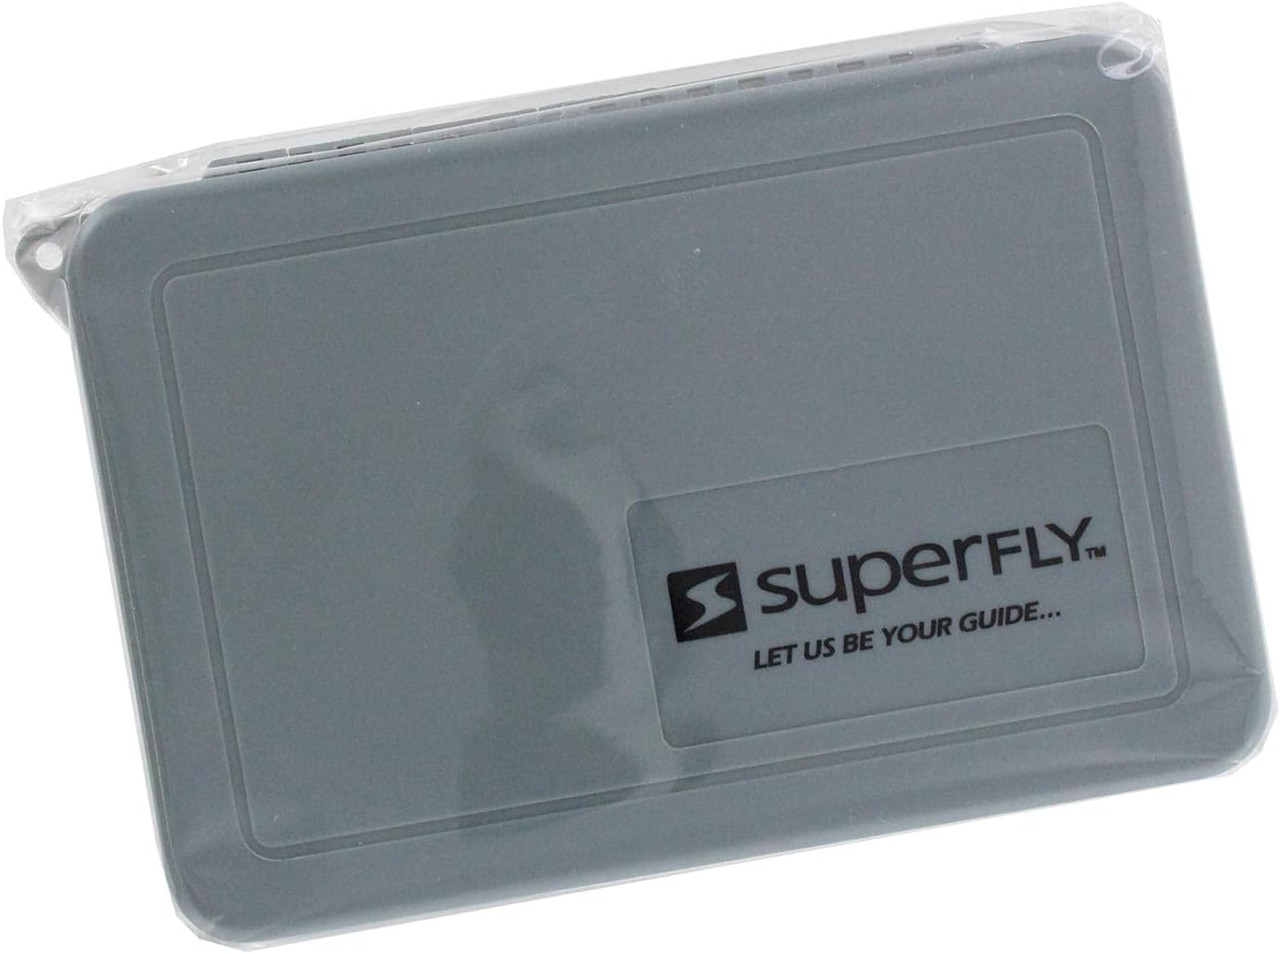 Superfly Fly Box Flat Ripple Large